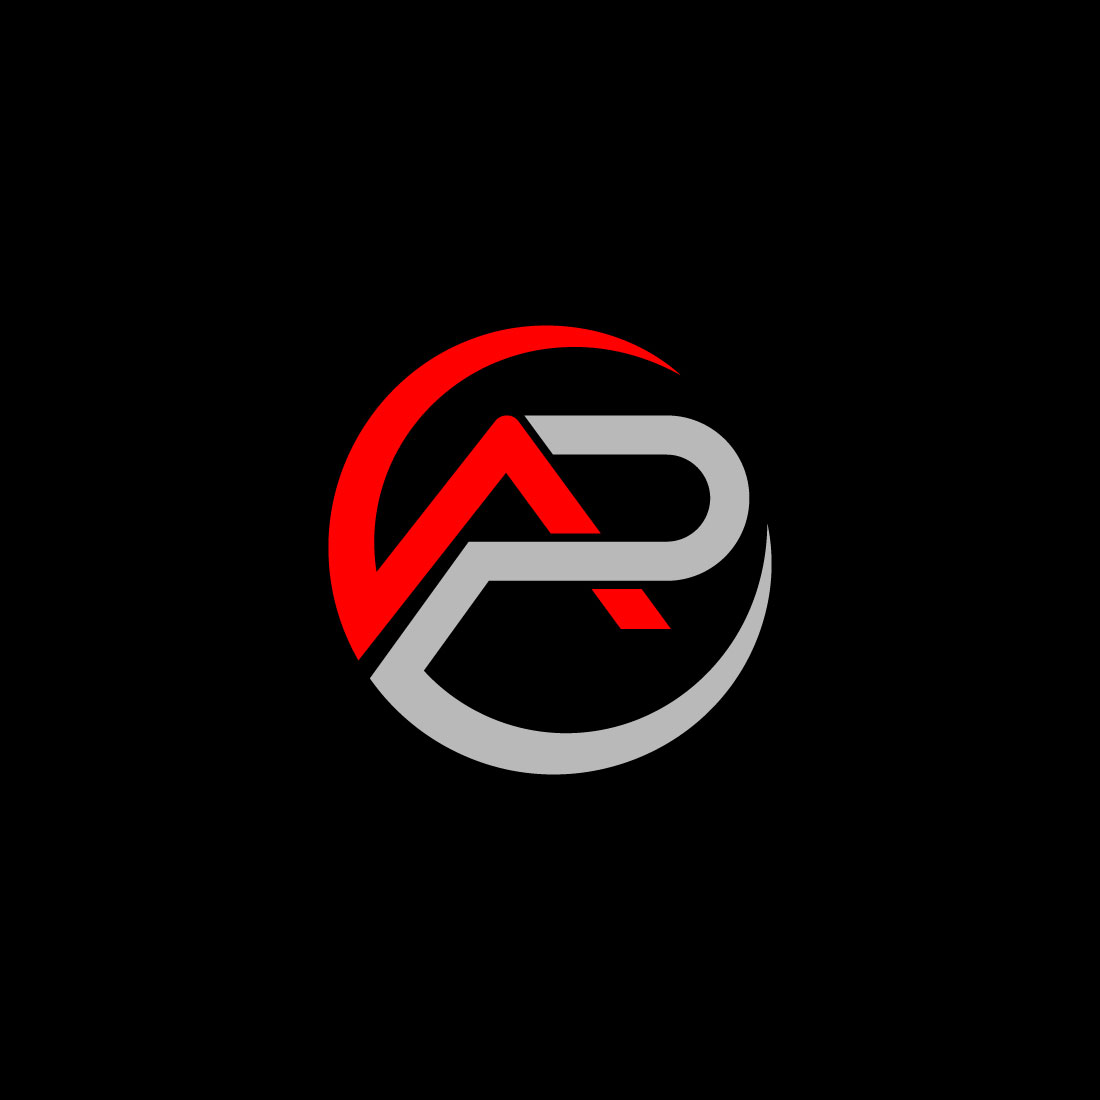 Logo AP Design Template cover image.